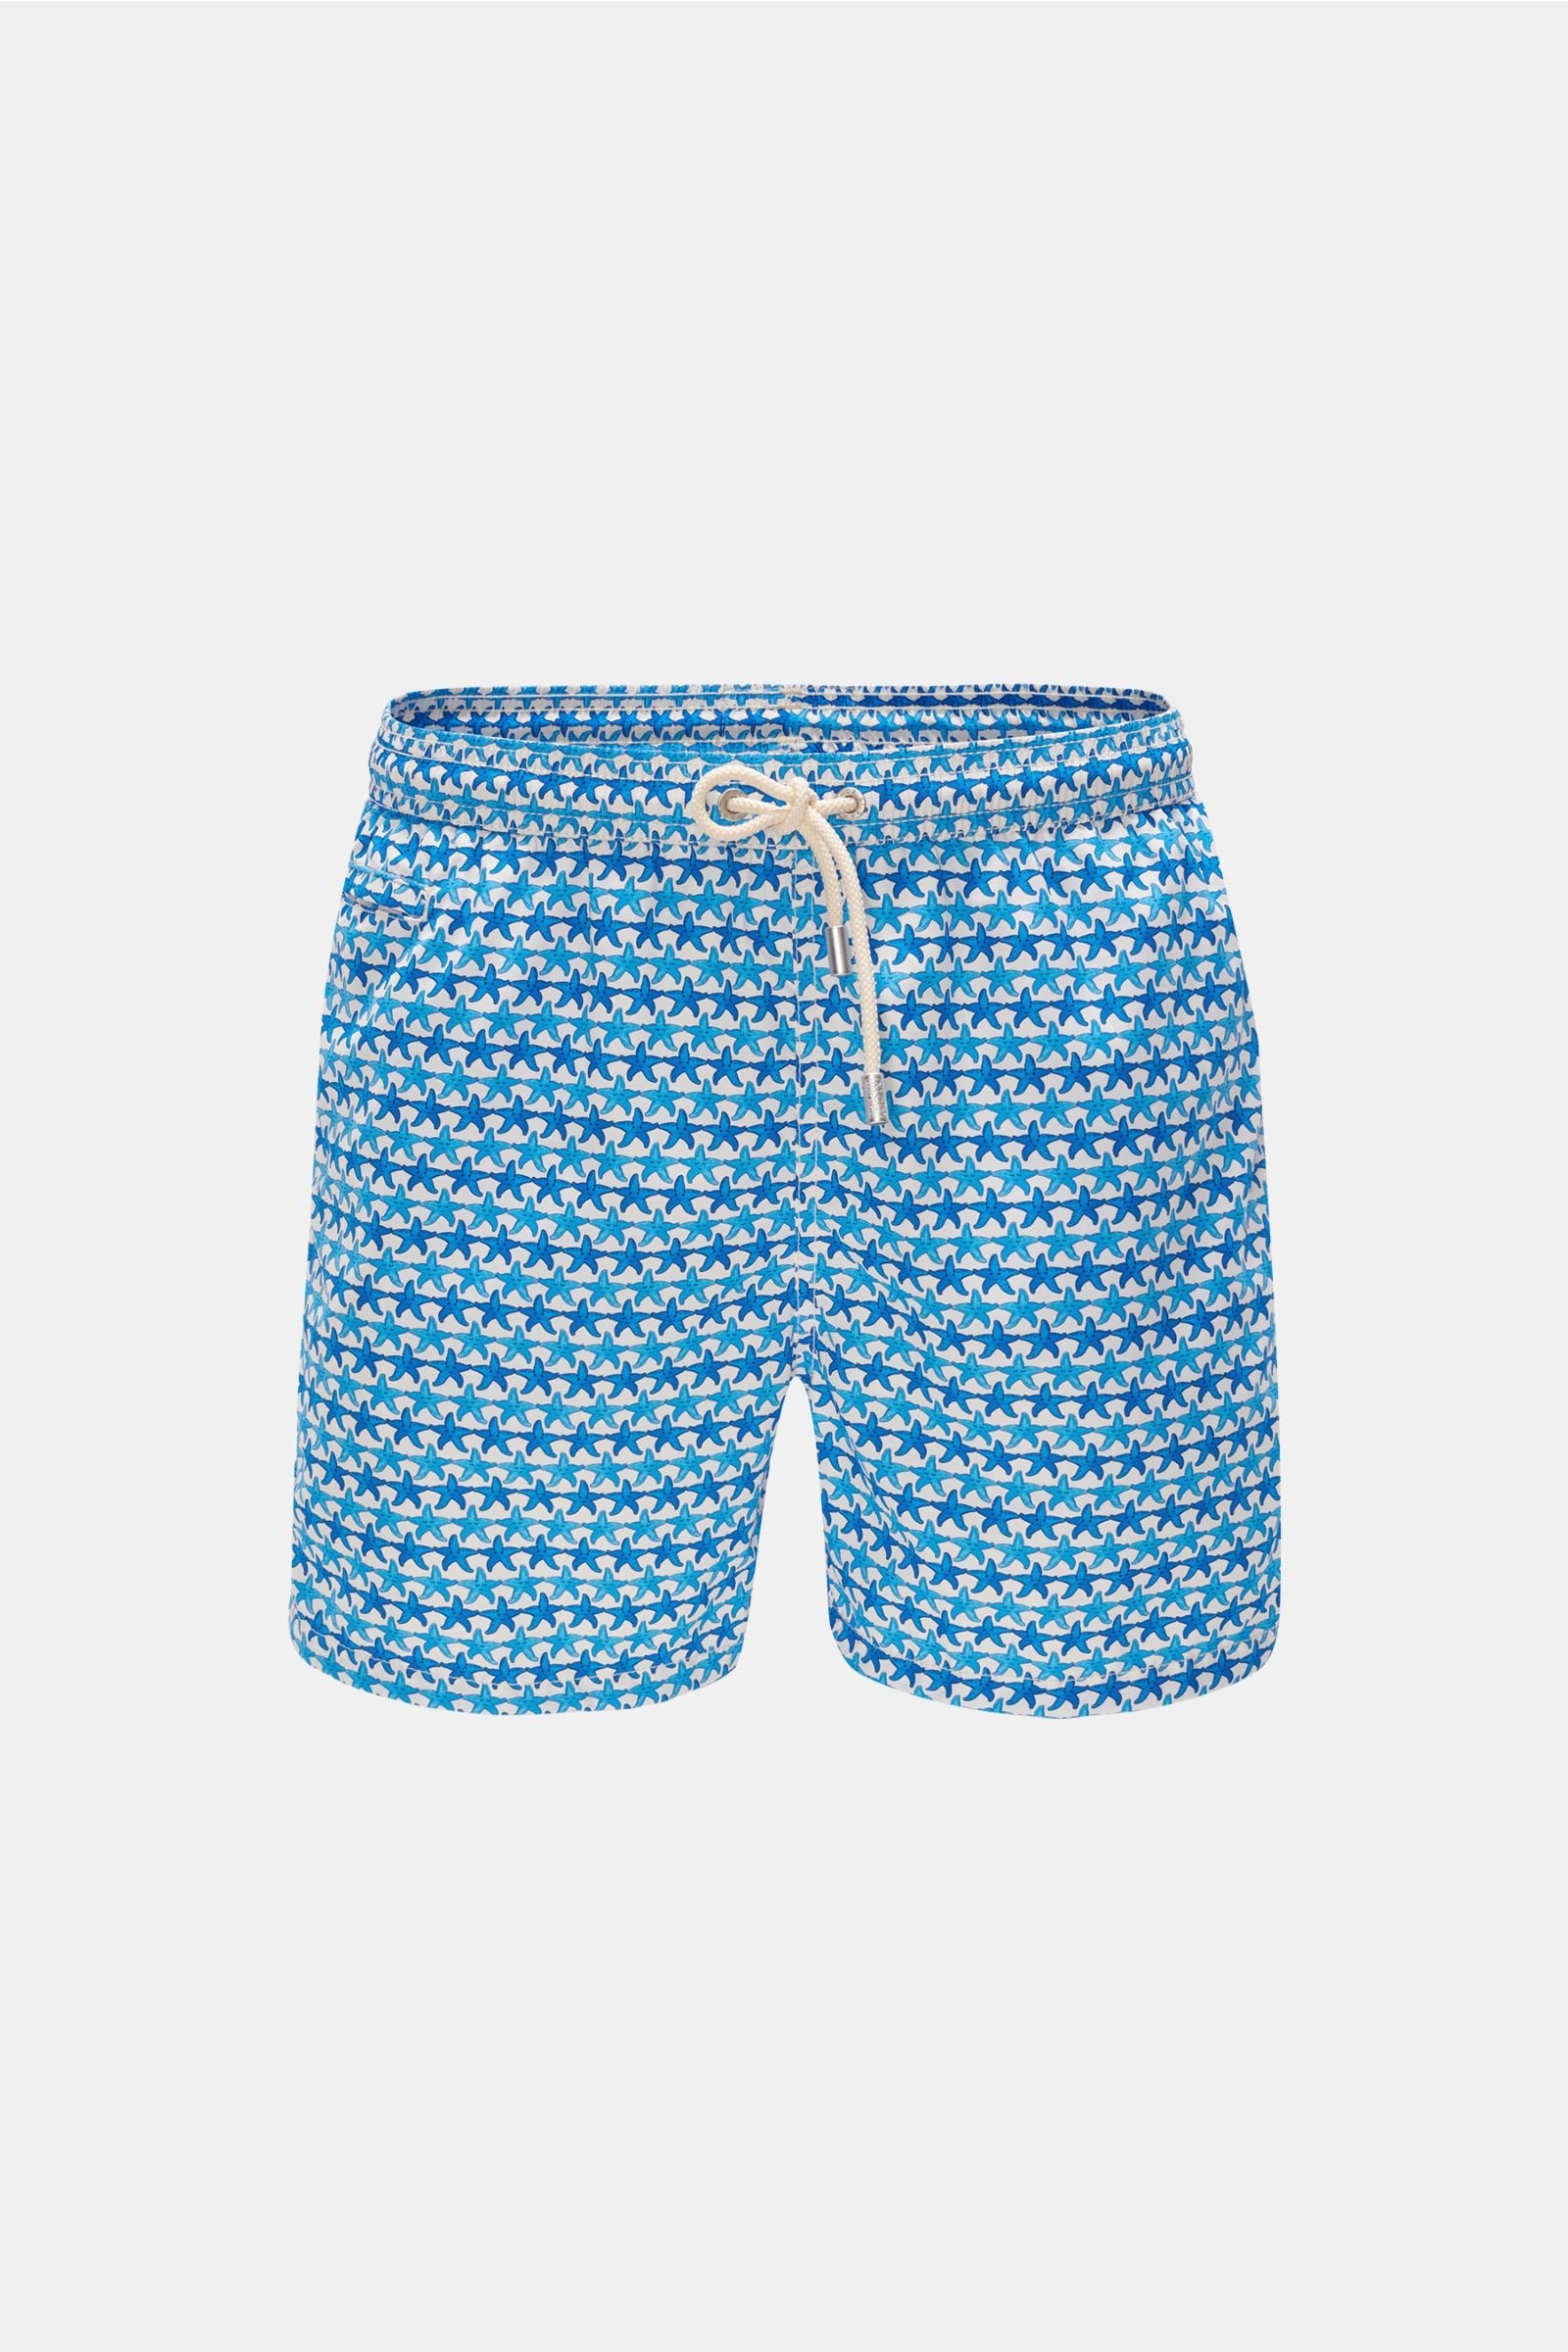 Swim shorts 'Friendly Starfish' blue/white patterned